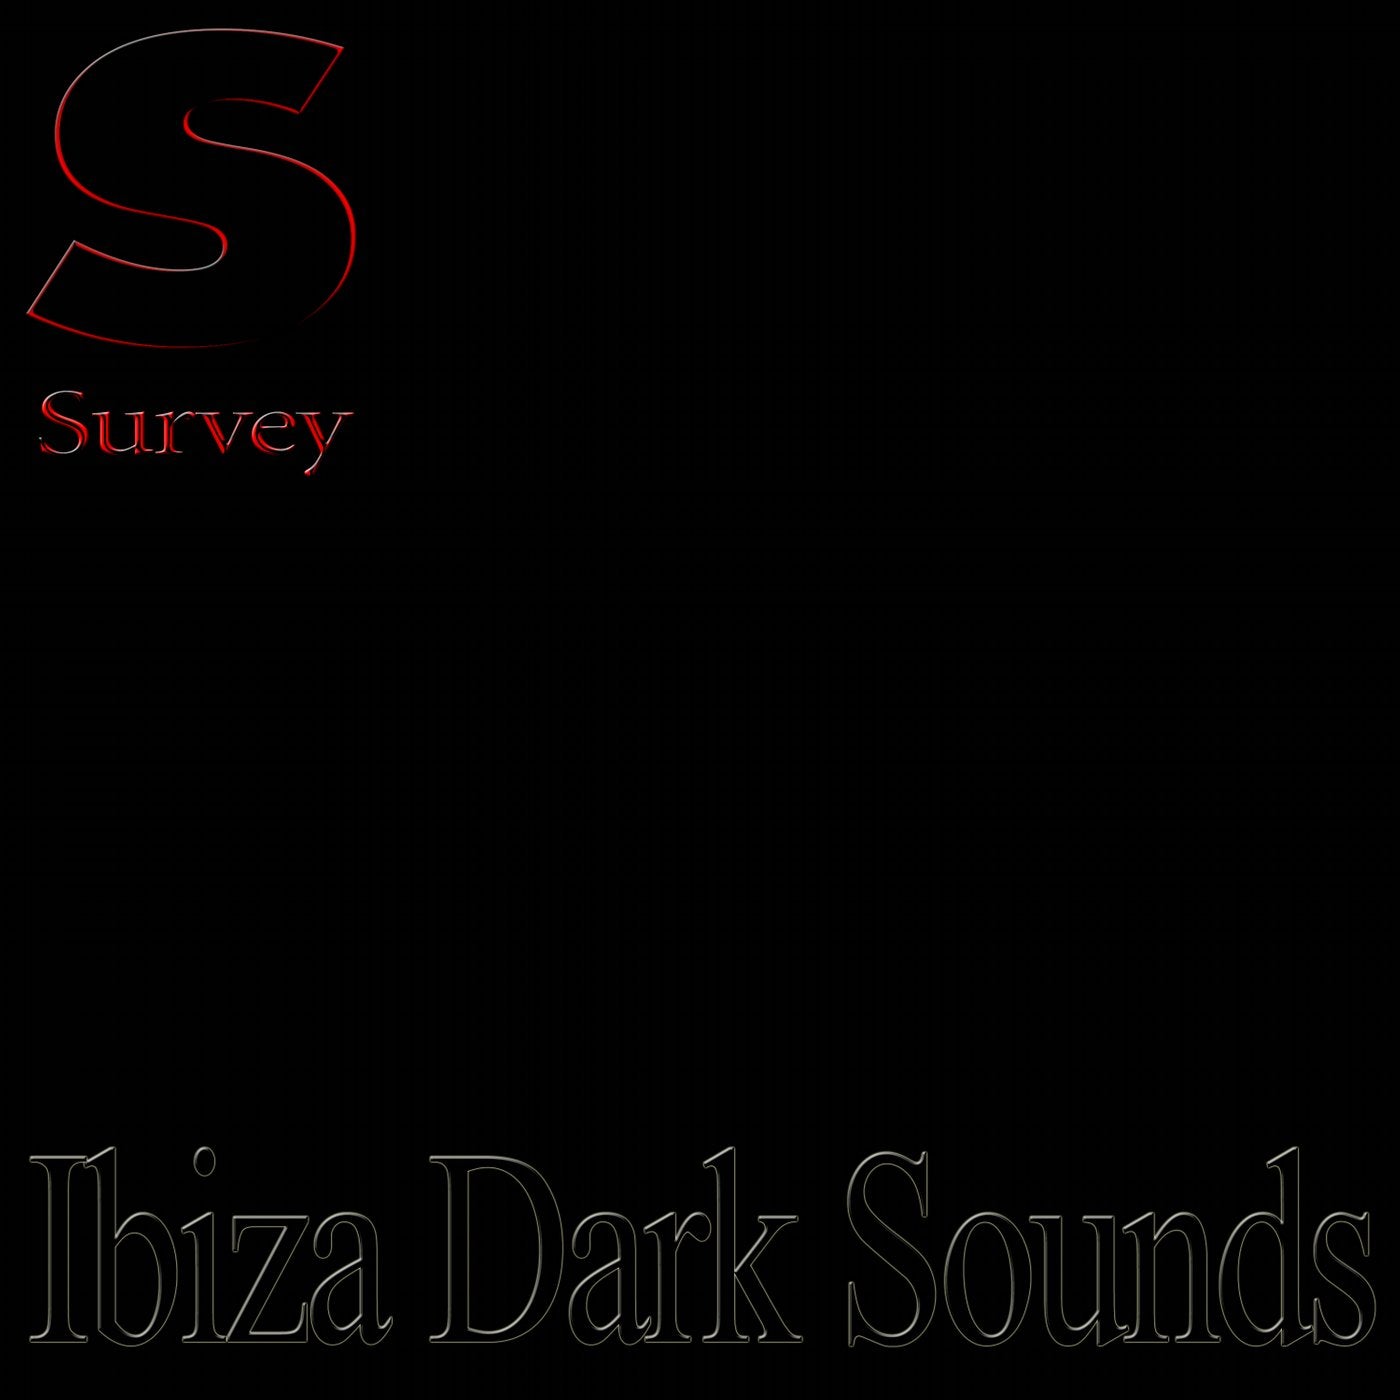 Ibiza Dark Sounds